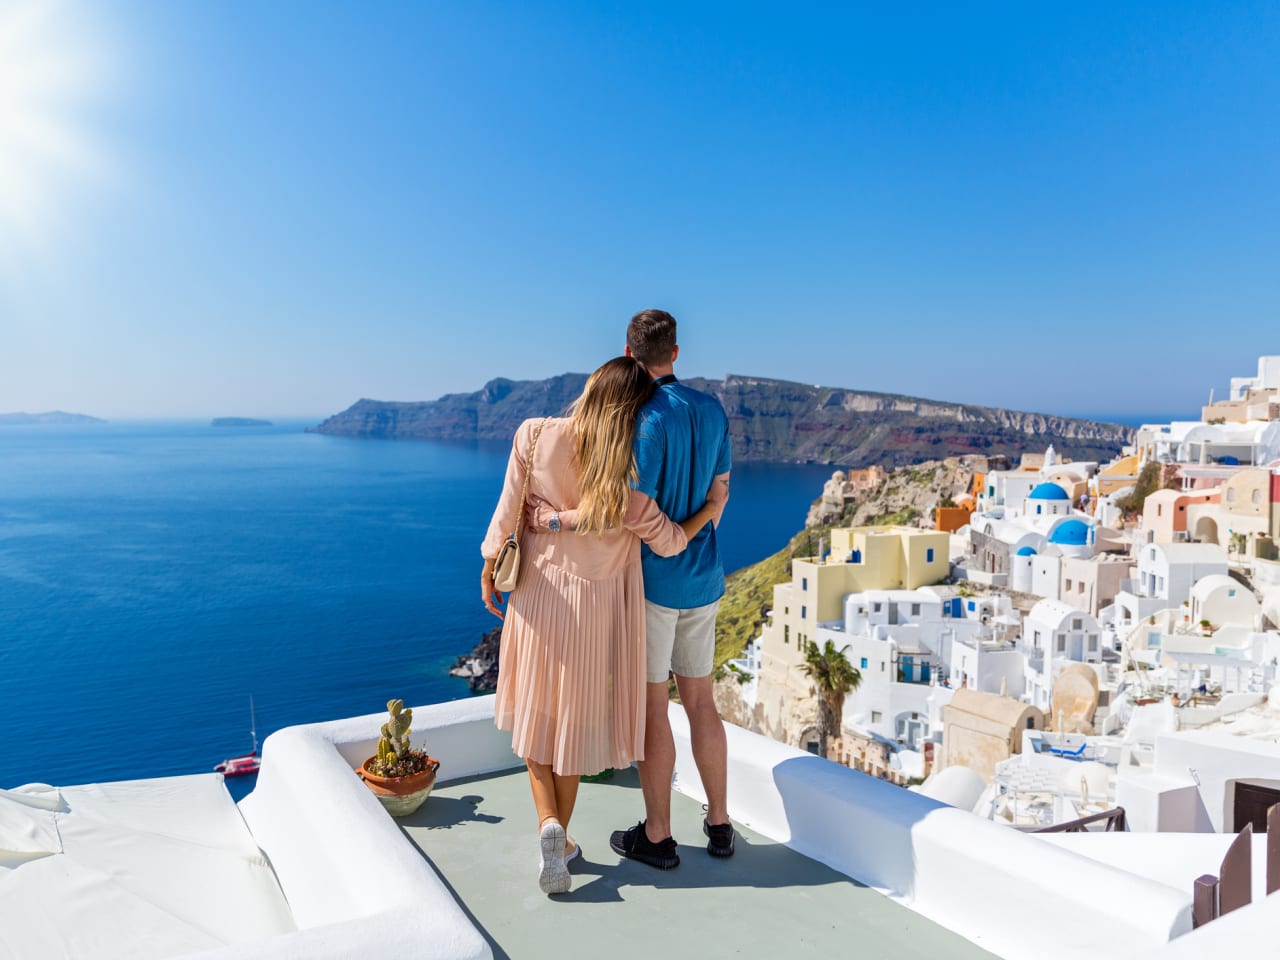 Paar in Santorini, Griechenland ©Santorines/iStock / Getty Images Plus via Getty Images